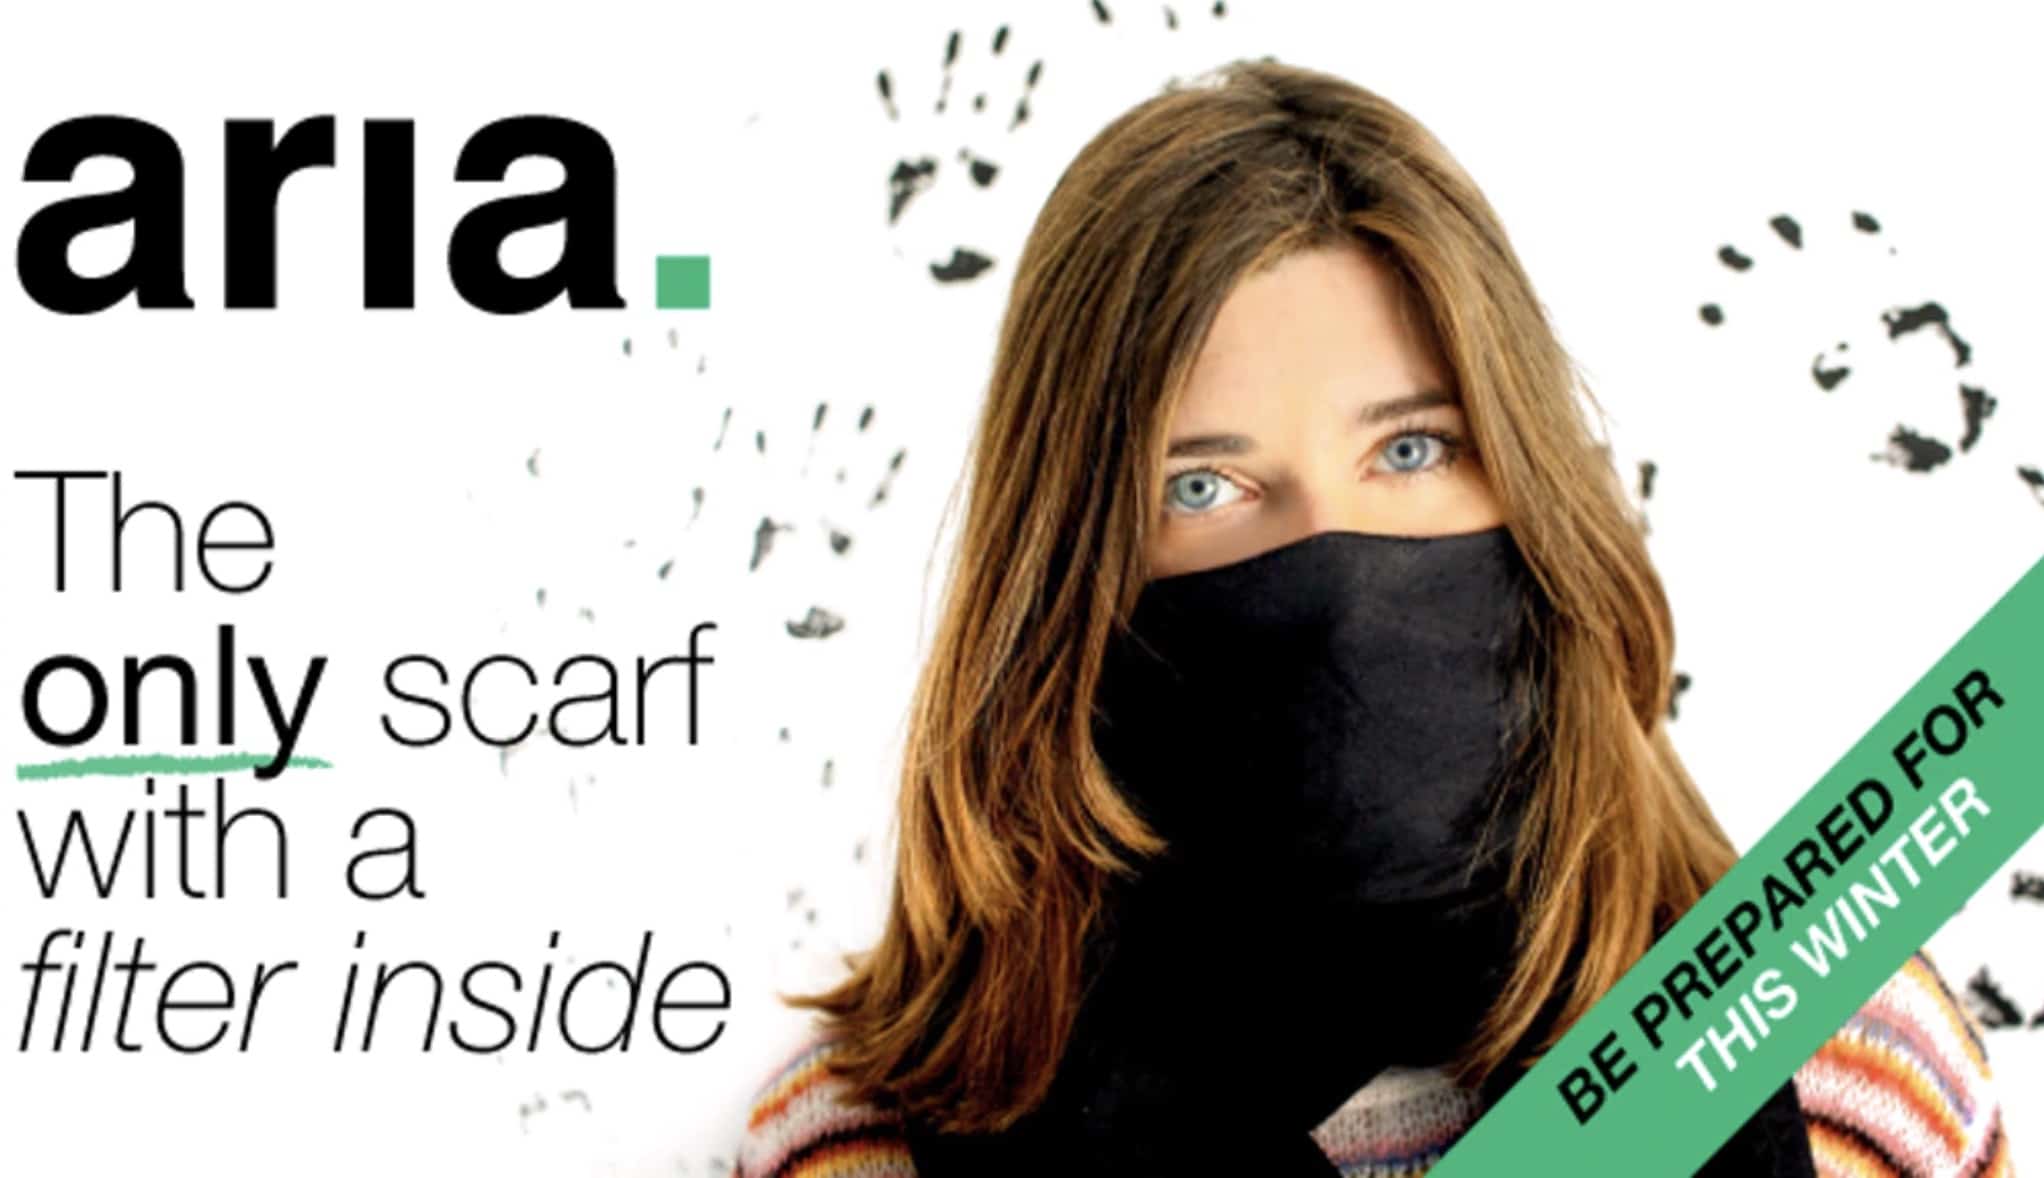 aria scarf kickstarter review